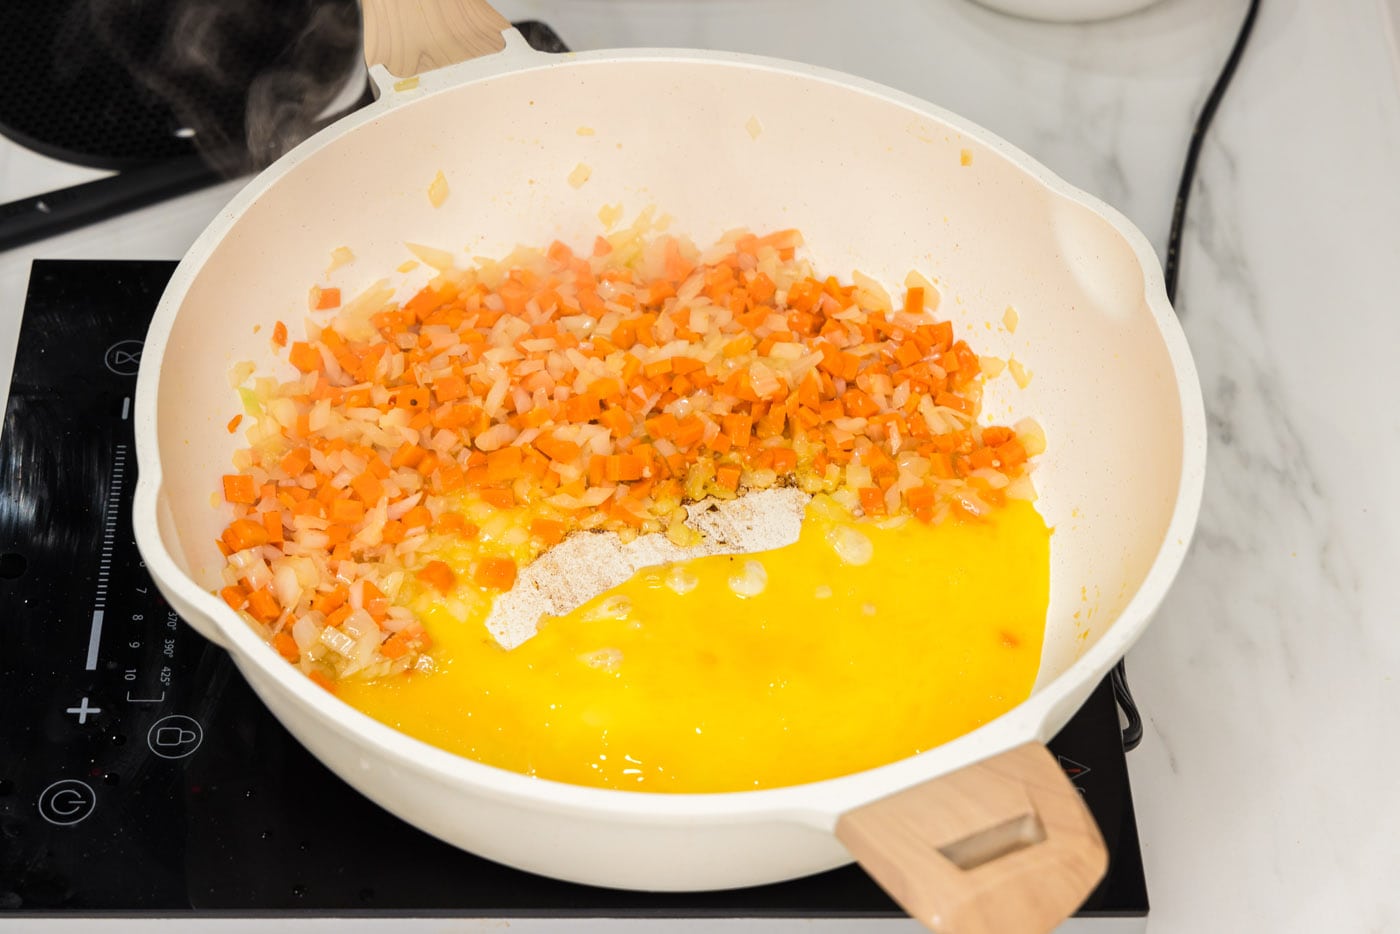 adding whisked eggs to stir fry veggies in skillet